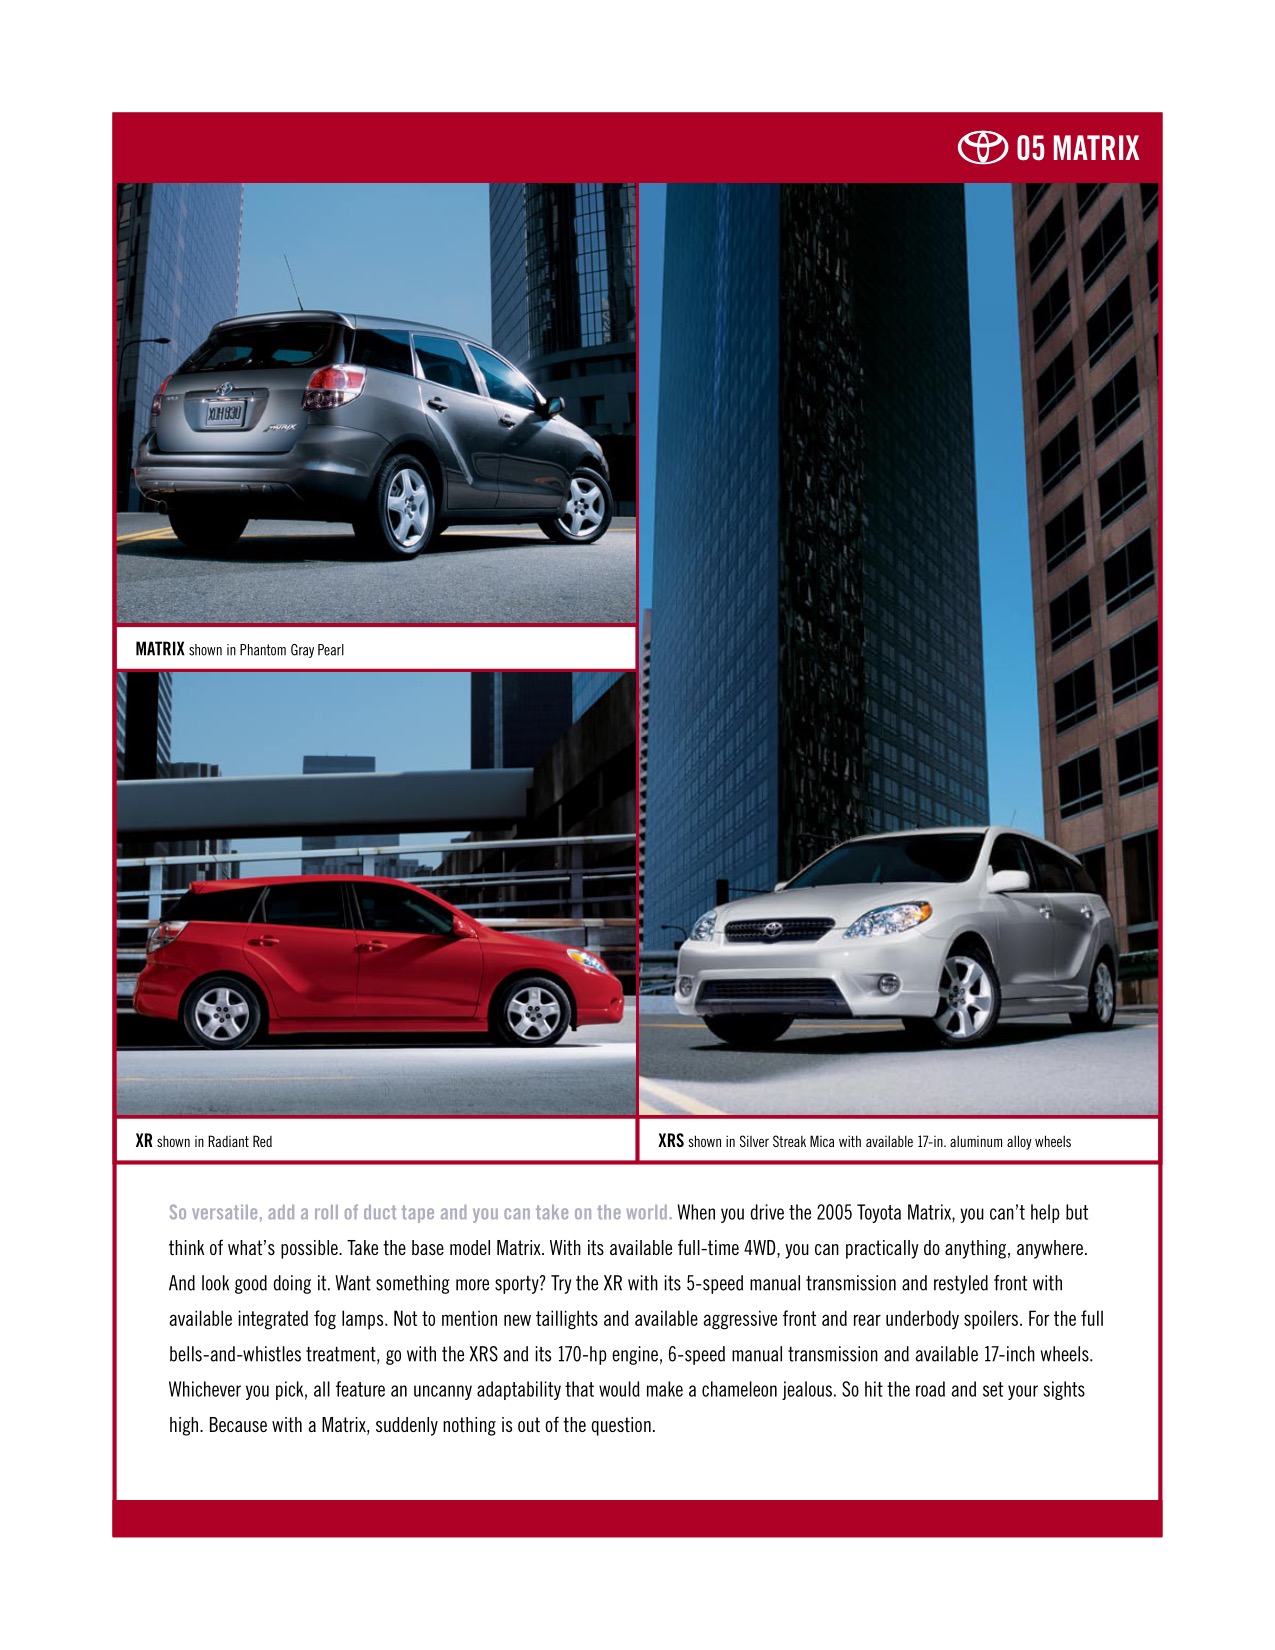 2005 Toyota Matrix Brochure